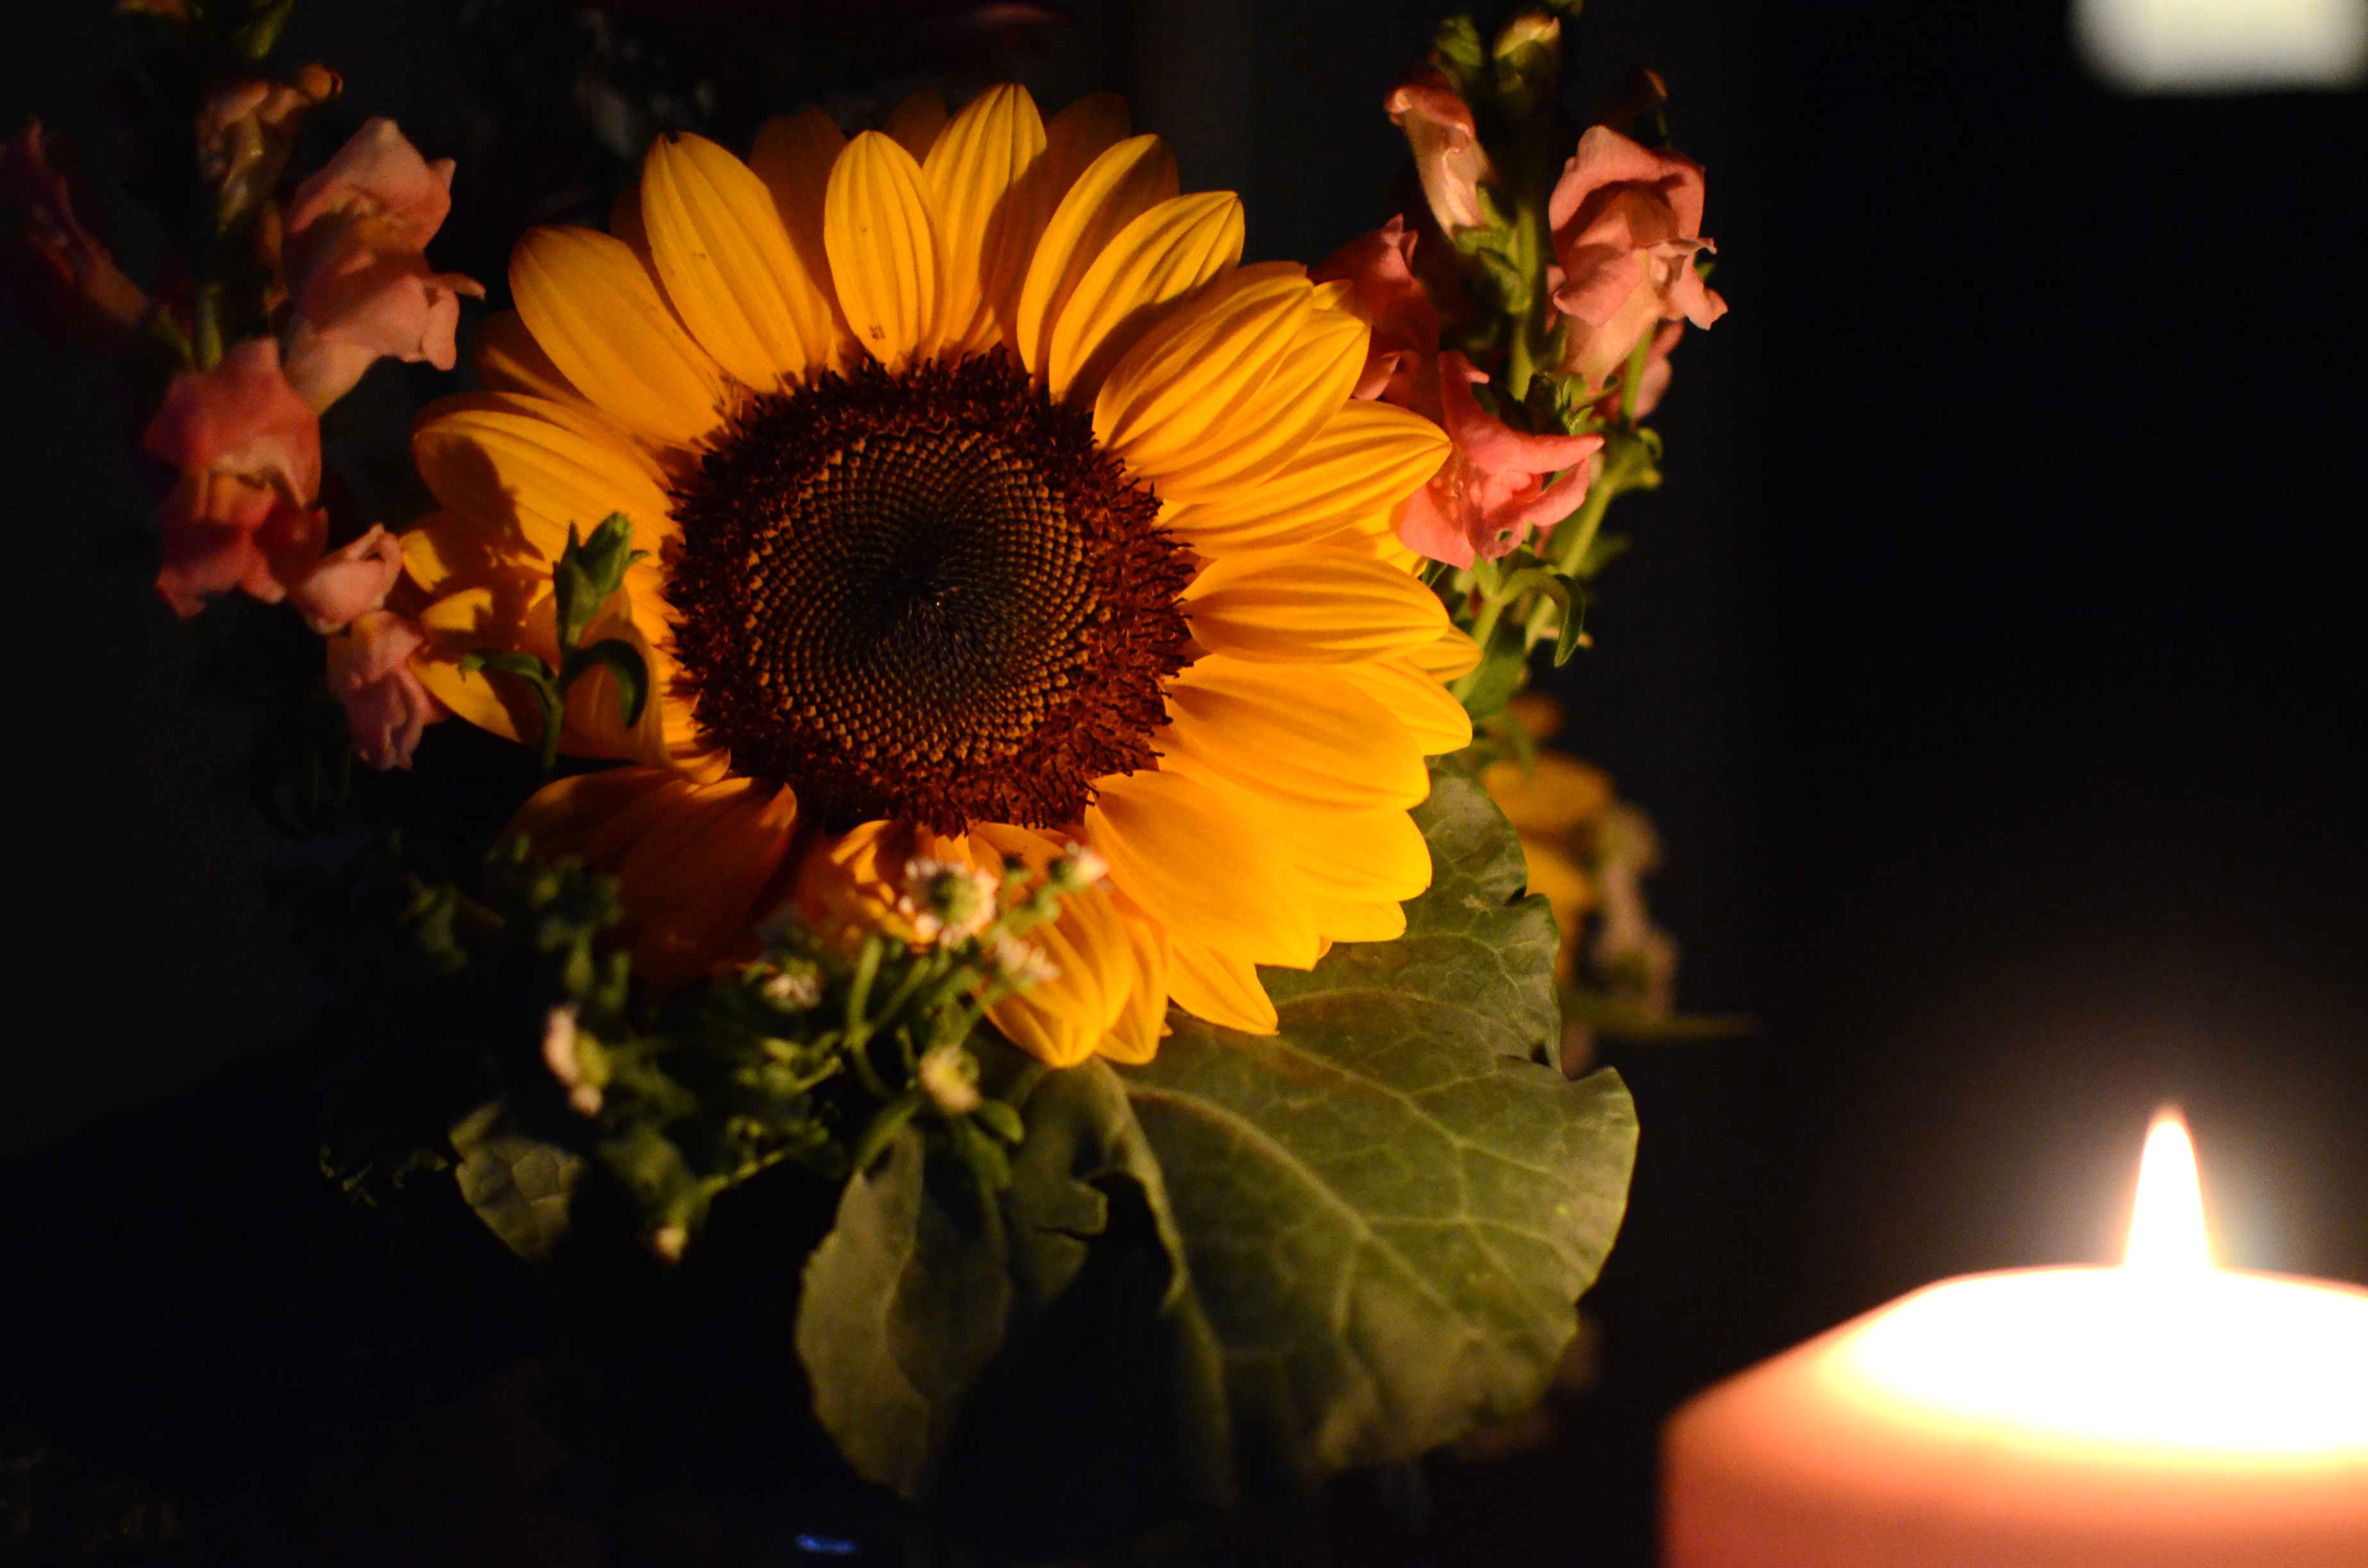 Flowers lit in chiaroscuro style.